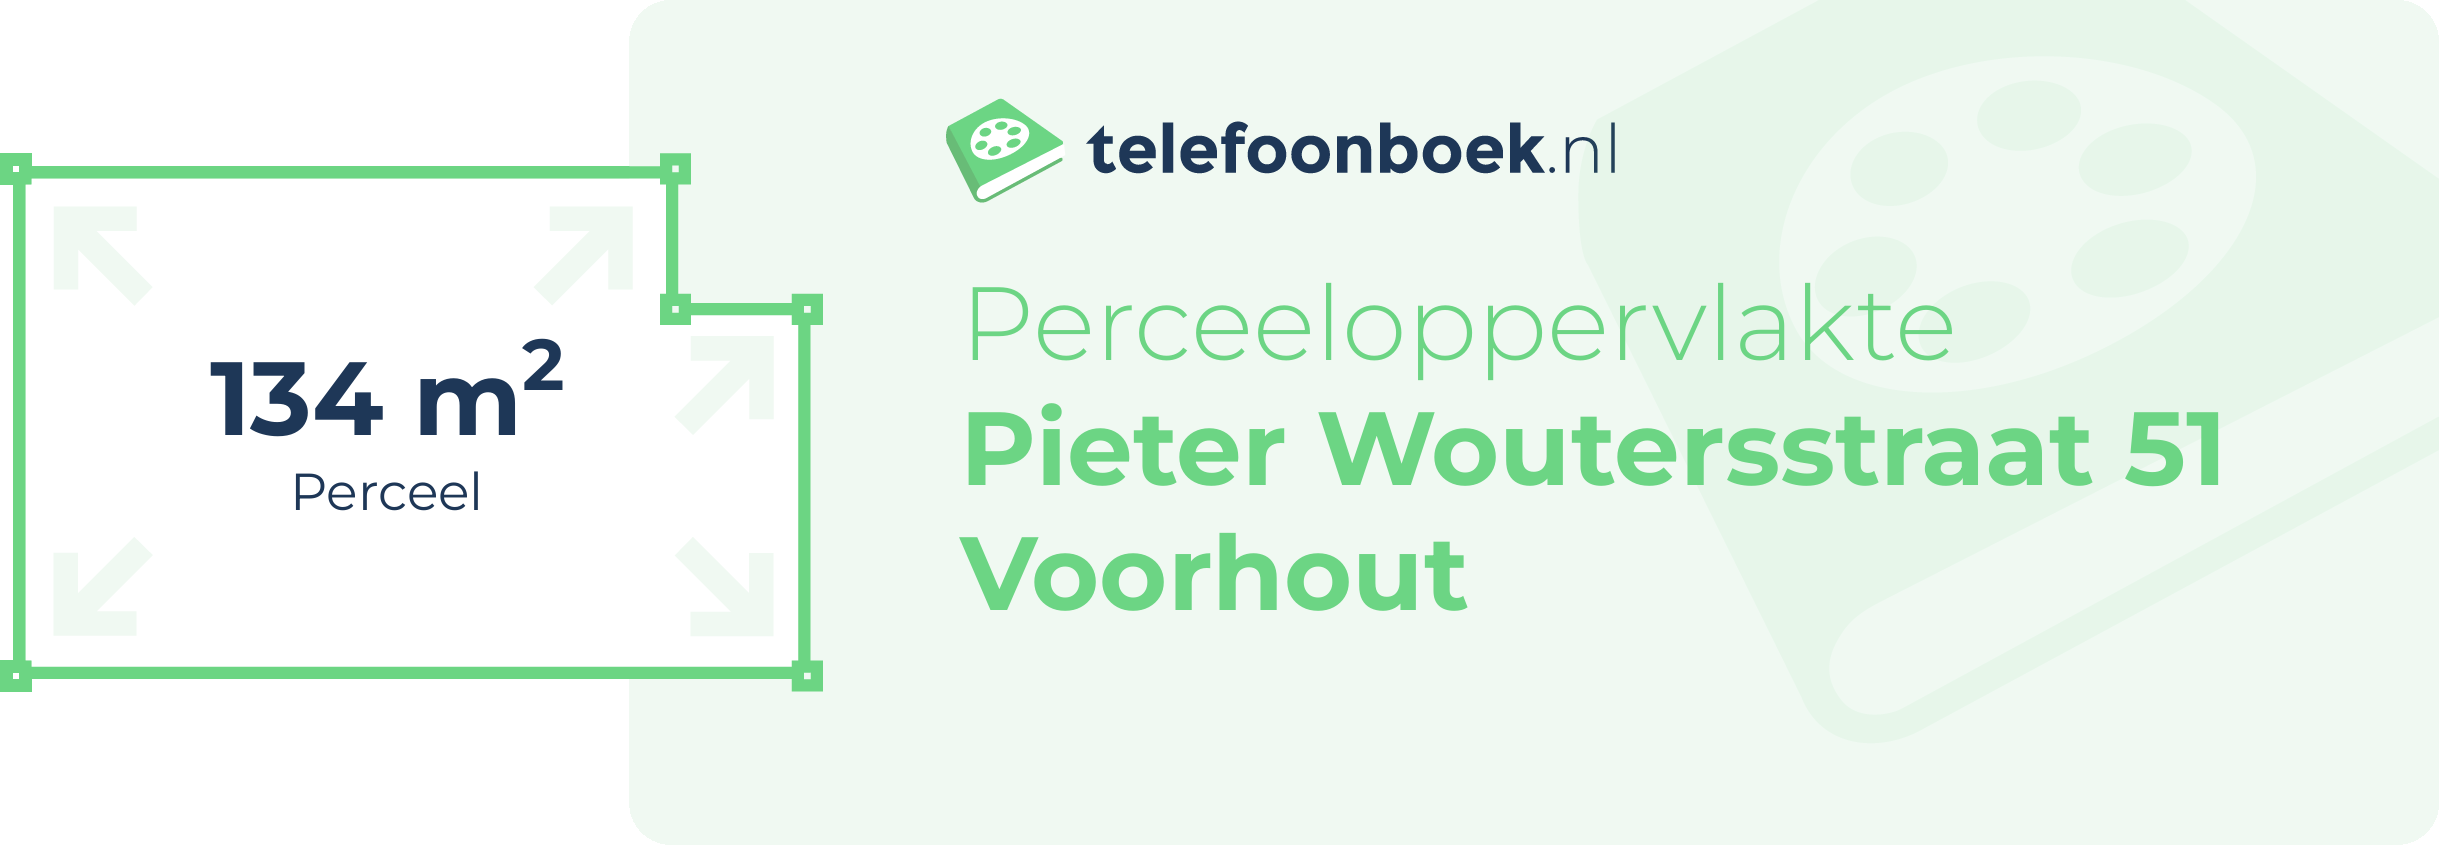 Perceeloppervlakte Pieter Woutersstraat 51 Voorhout